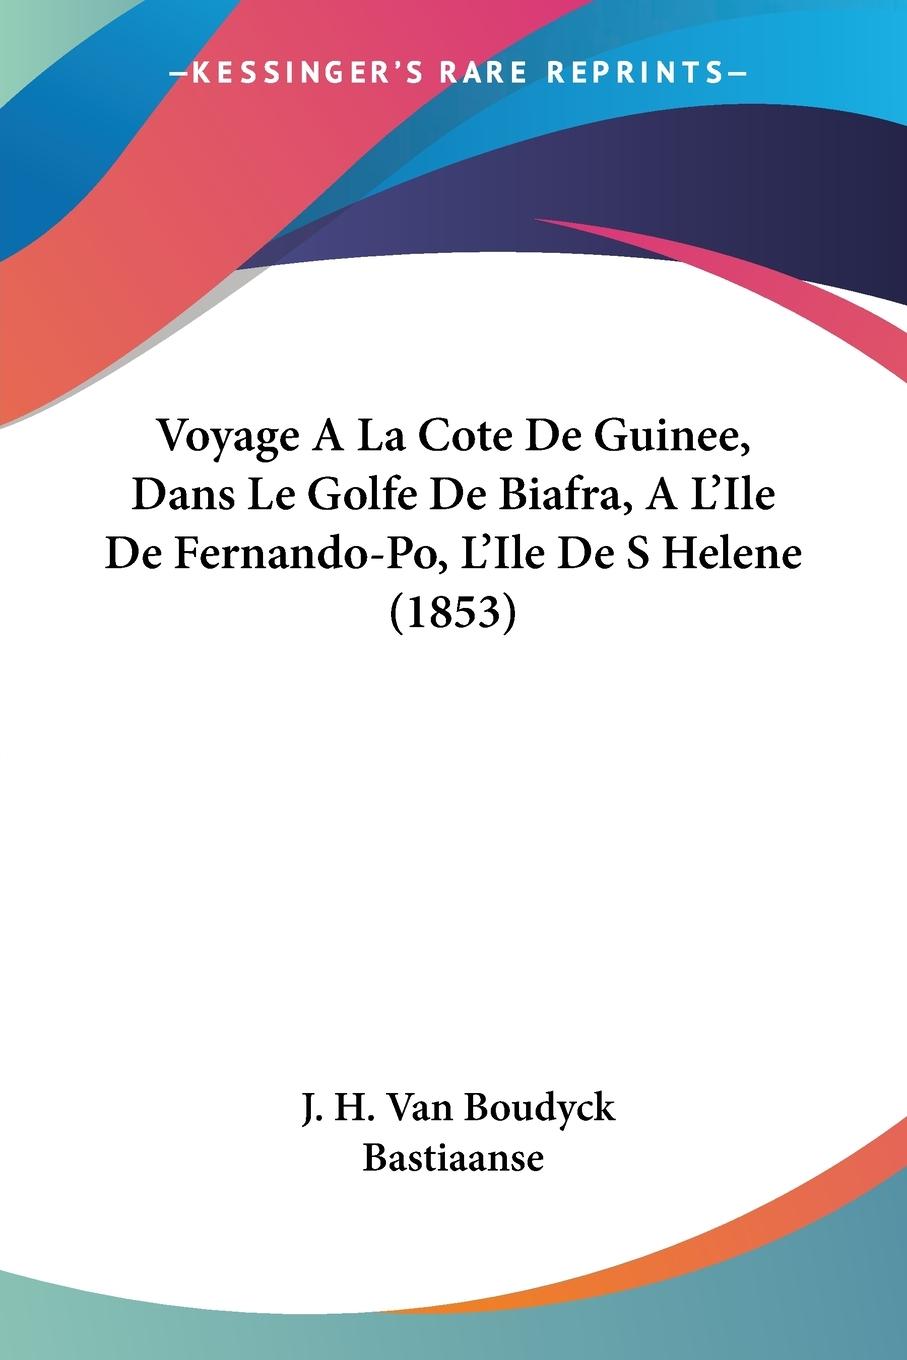 Voyage ALa Cote De Guinee, Dans Le Golfe De Biafra, A L Ile De Fernando-Po, L Ile De S Helene (1853) - Bastiaanse, J. H. Van Boudyck